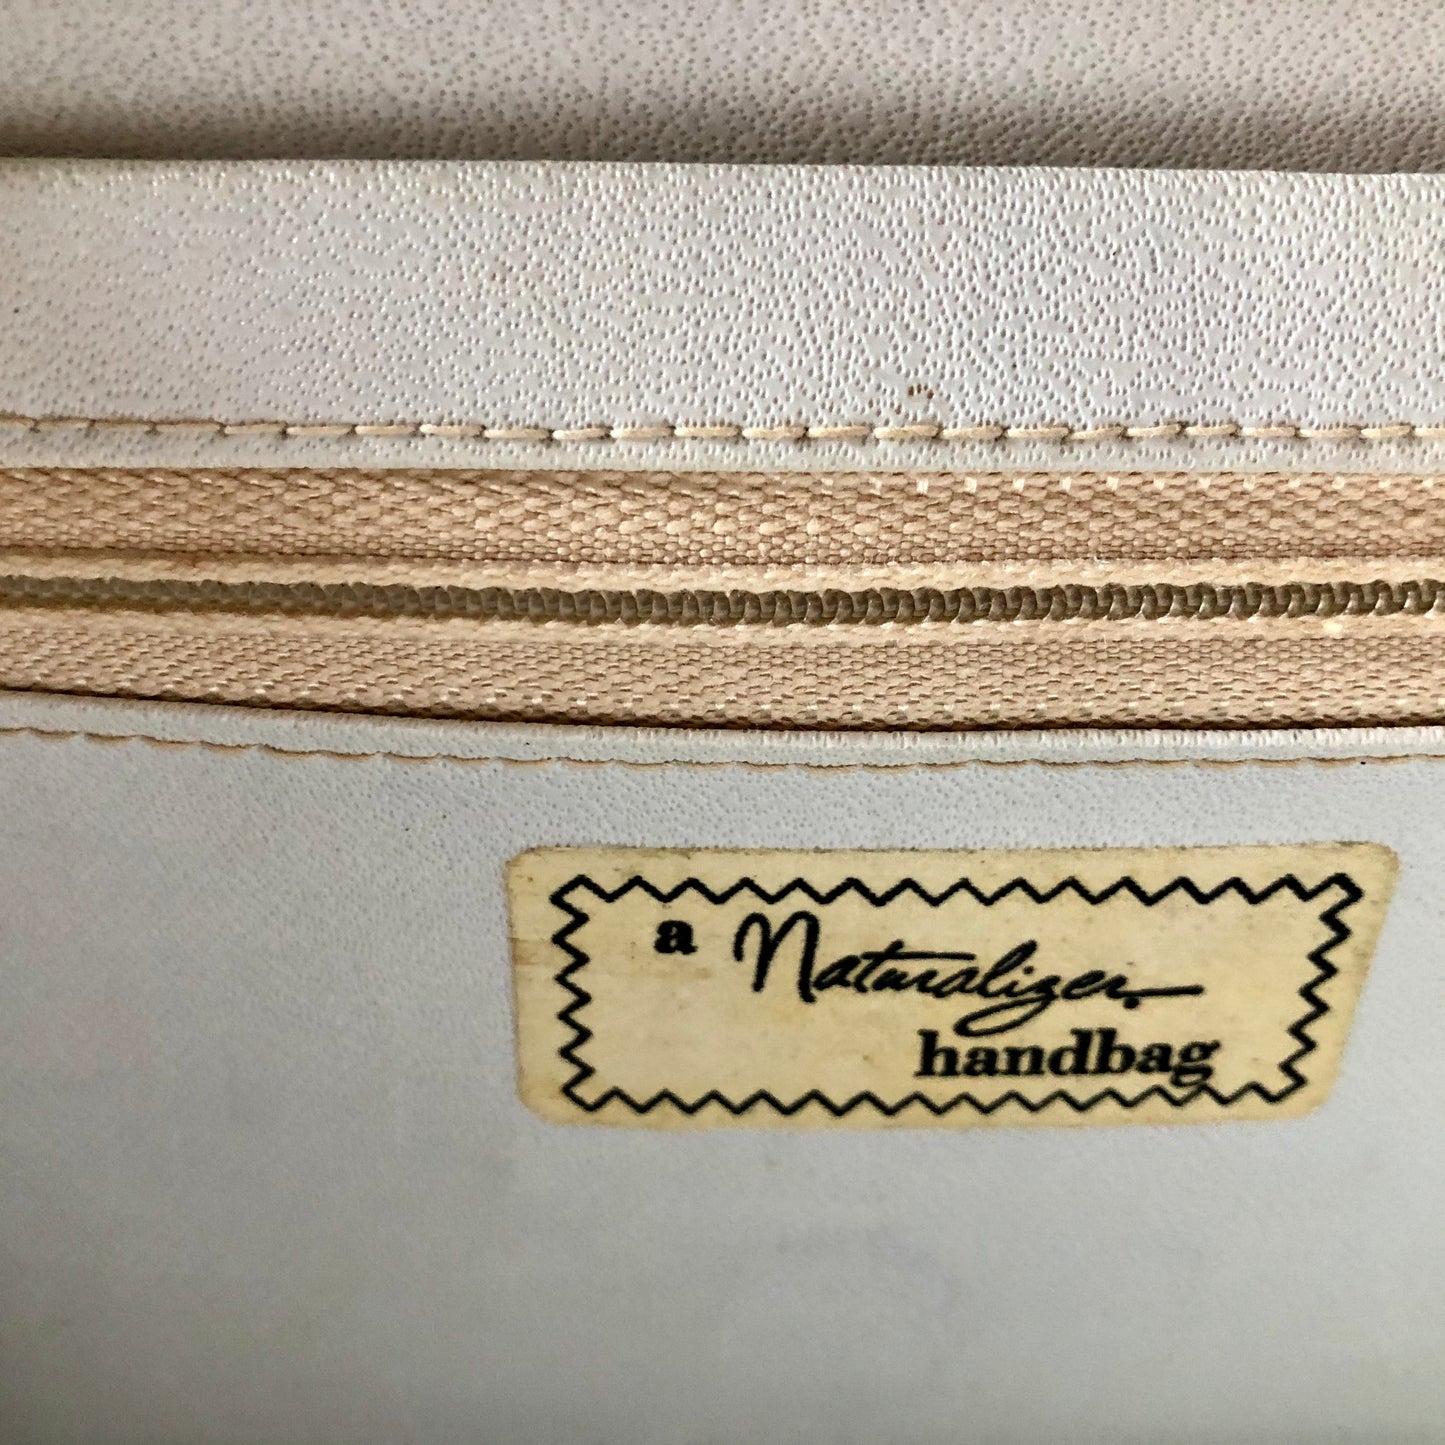 Retro Naturalizer Vegan Leather Handbag (c.1960s)